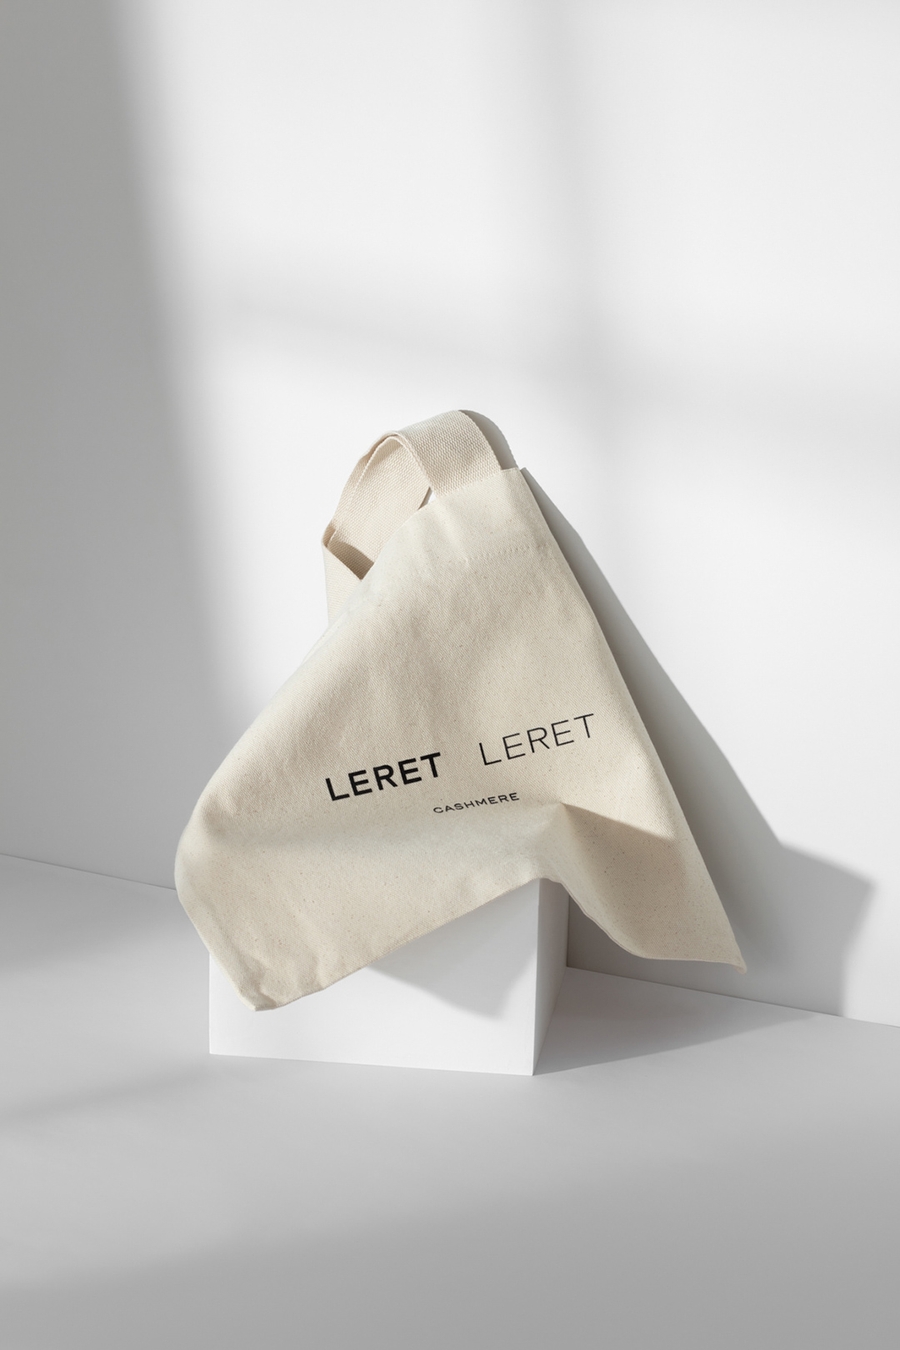 Leret Leret | Latente Studio